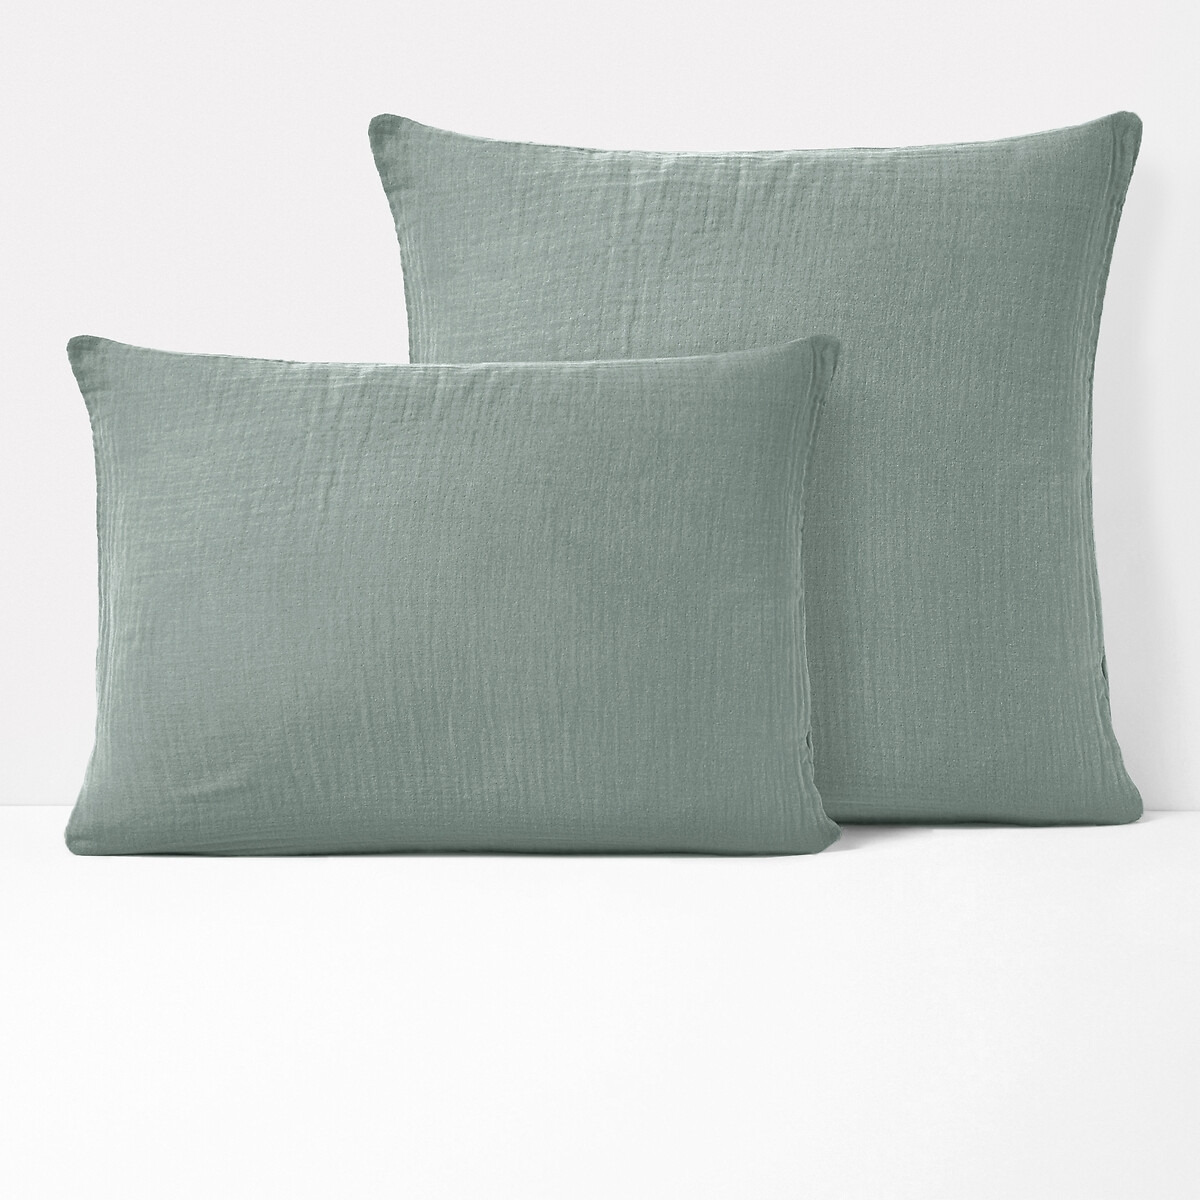 Kumla Plain Cotton Muslin Pillowcase - image 1